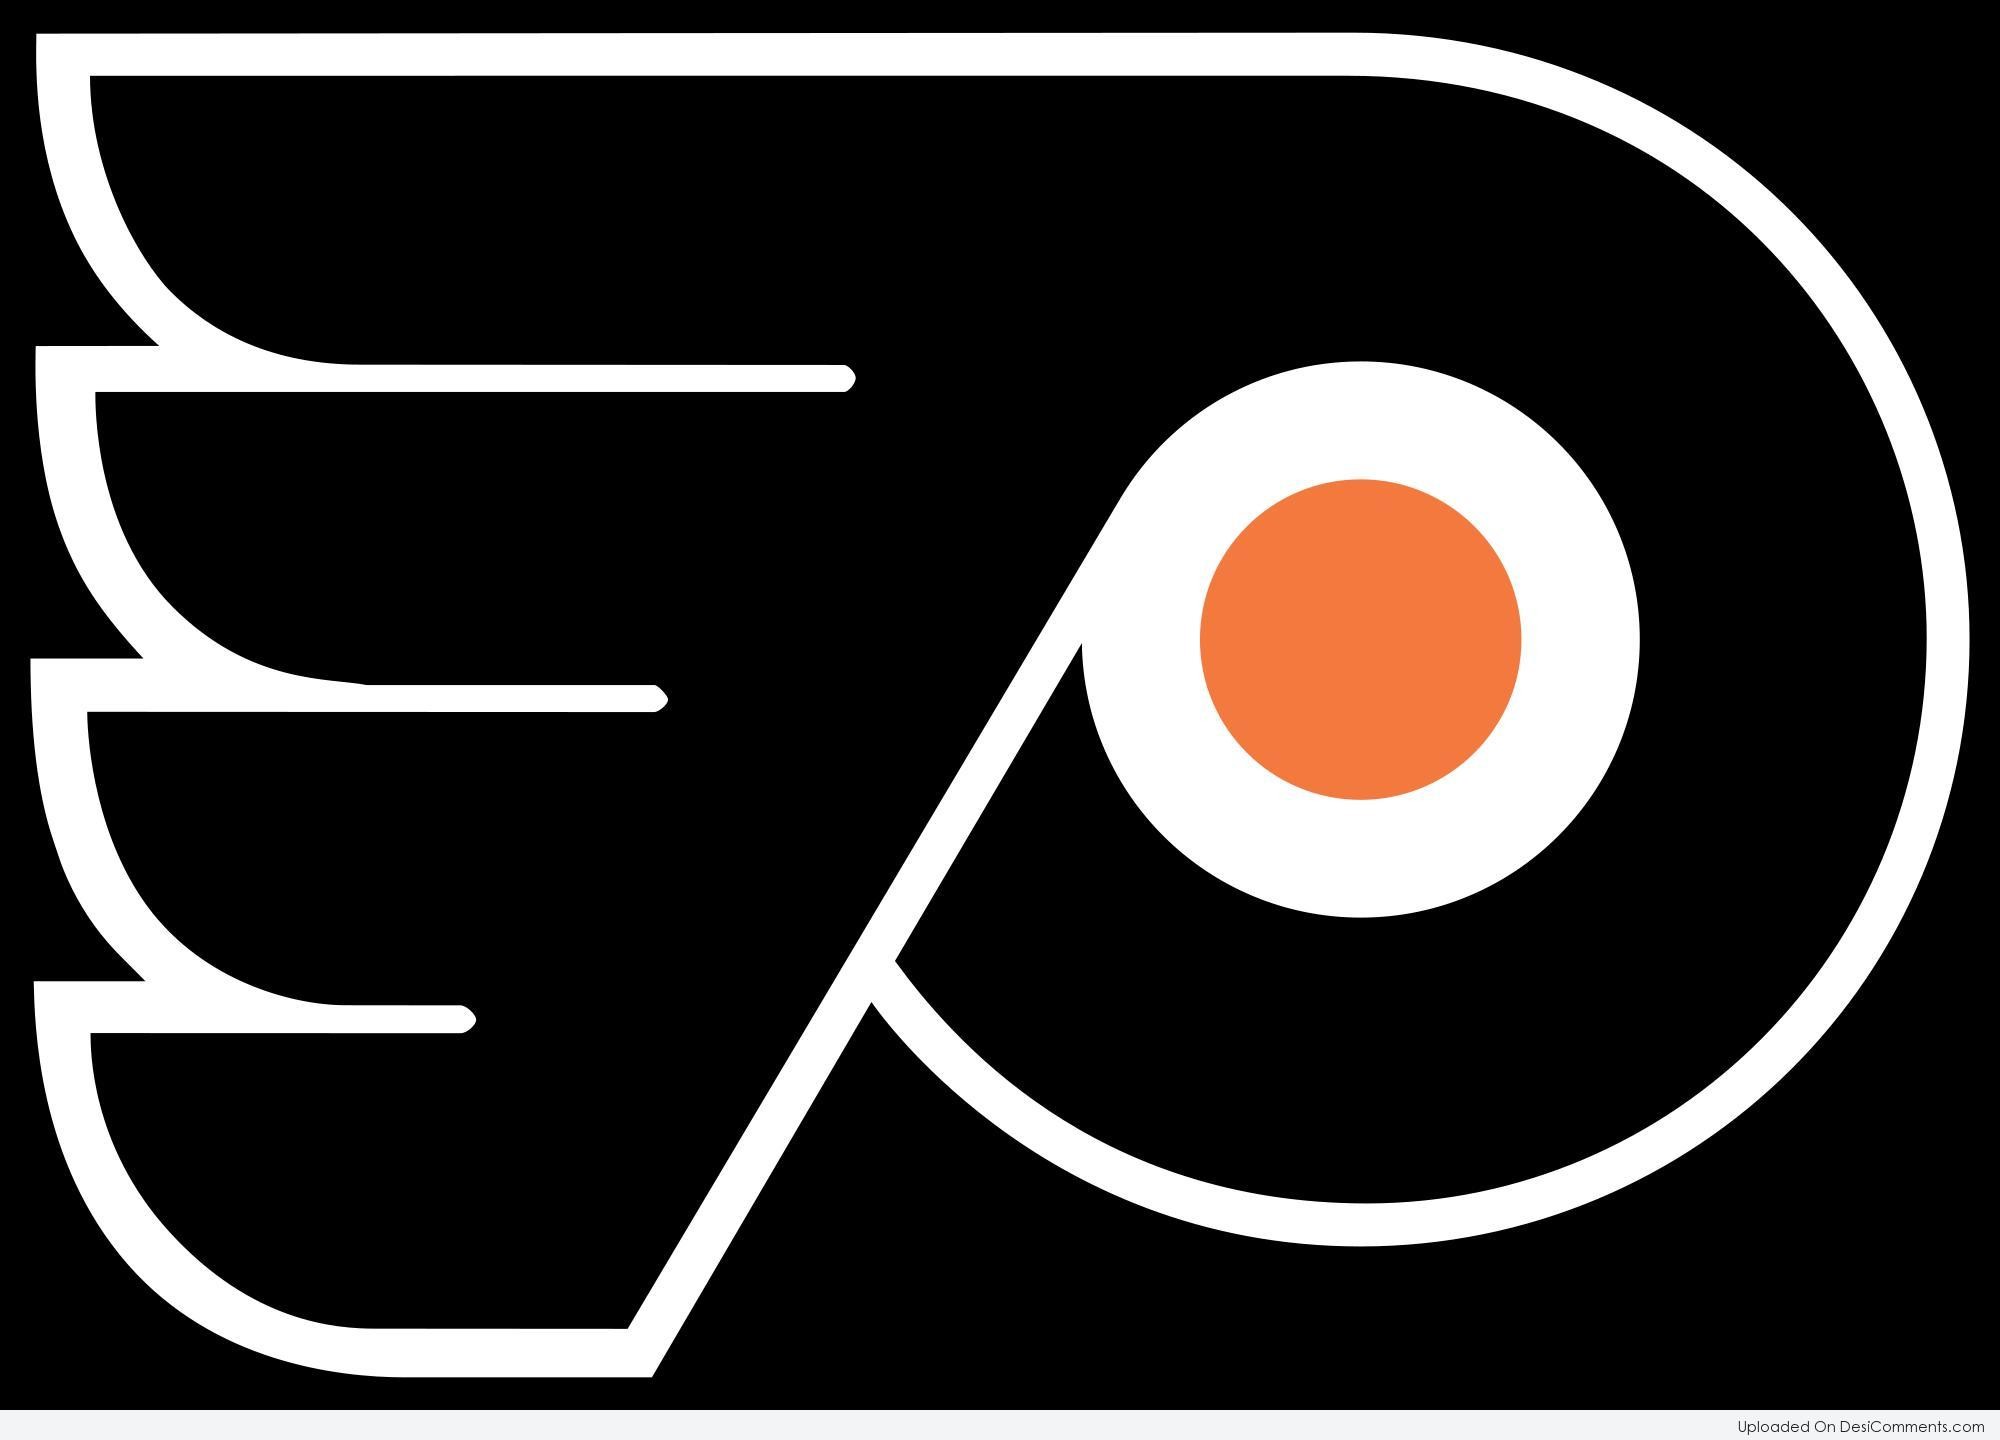 2000x1440 Philadelphia Flyers Logo | DesiComments.com